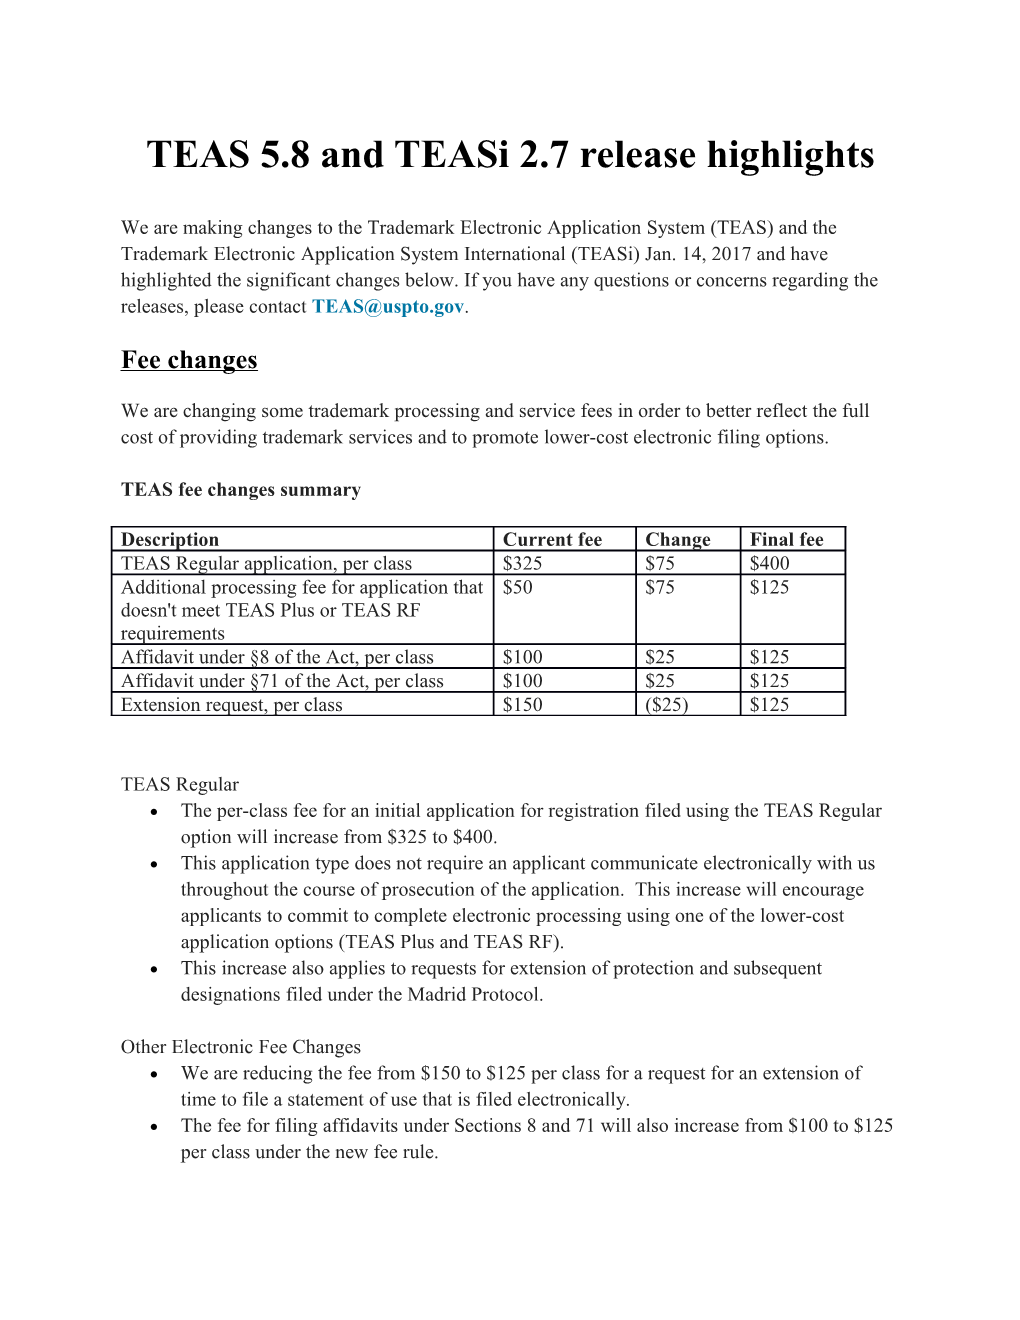 TEAS 5.8 and Teasi 2.7 Release Highlights